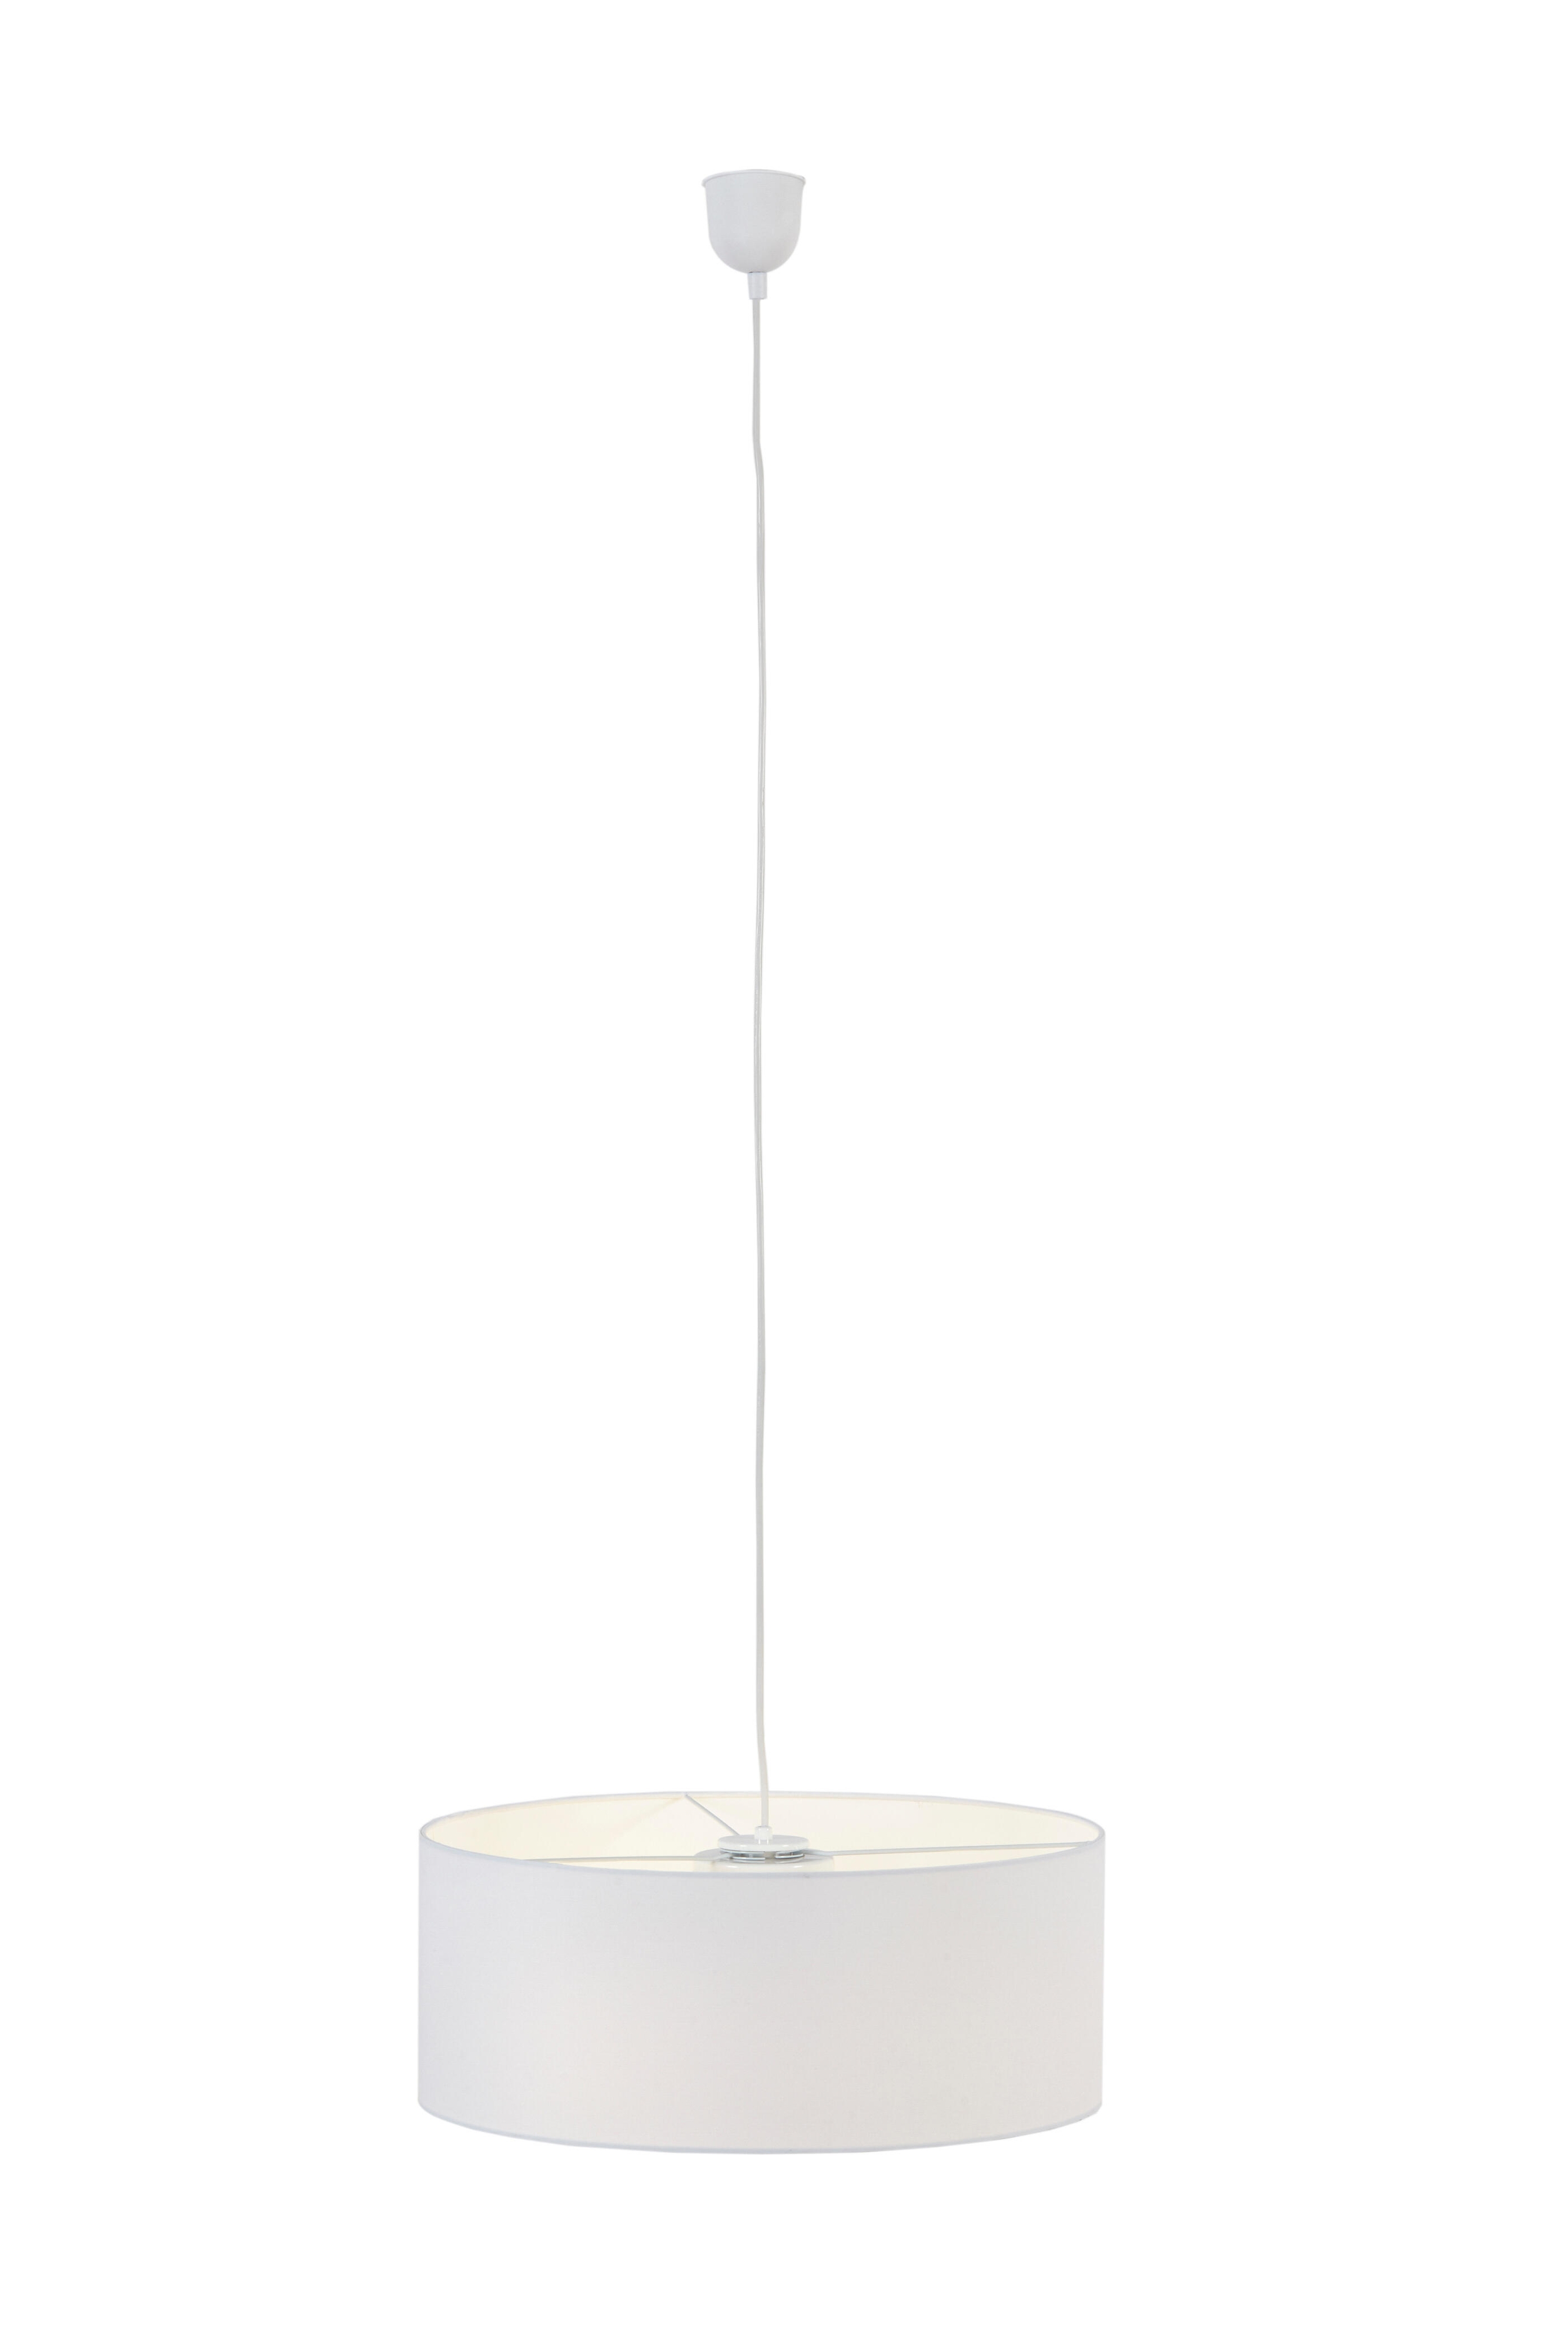 Lampadario Moderno Sitia bianco in tessuto, D. 48 cm, 3 luci, INSPIRE - 10